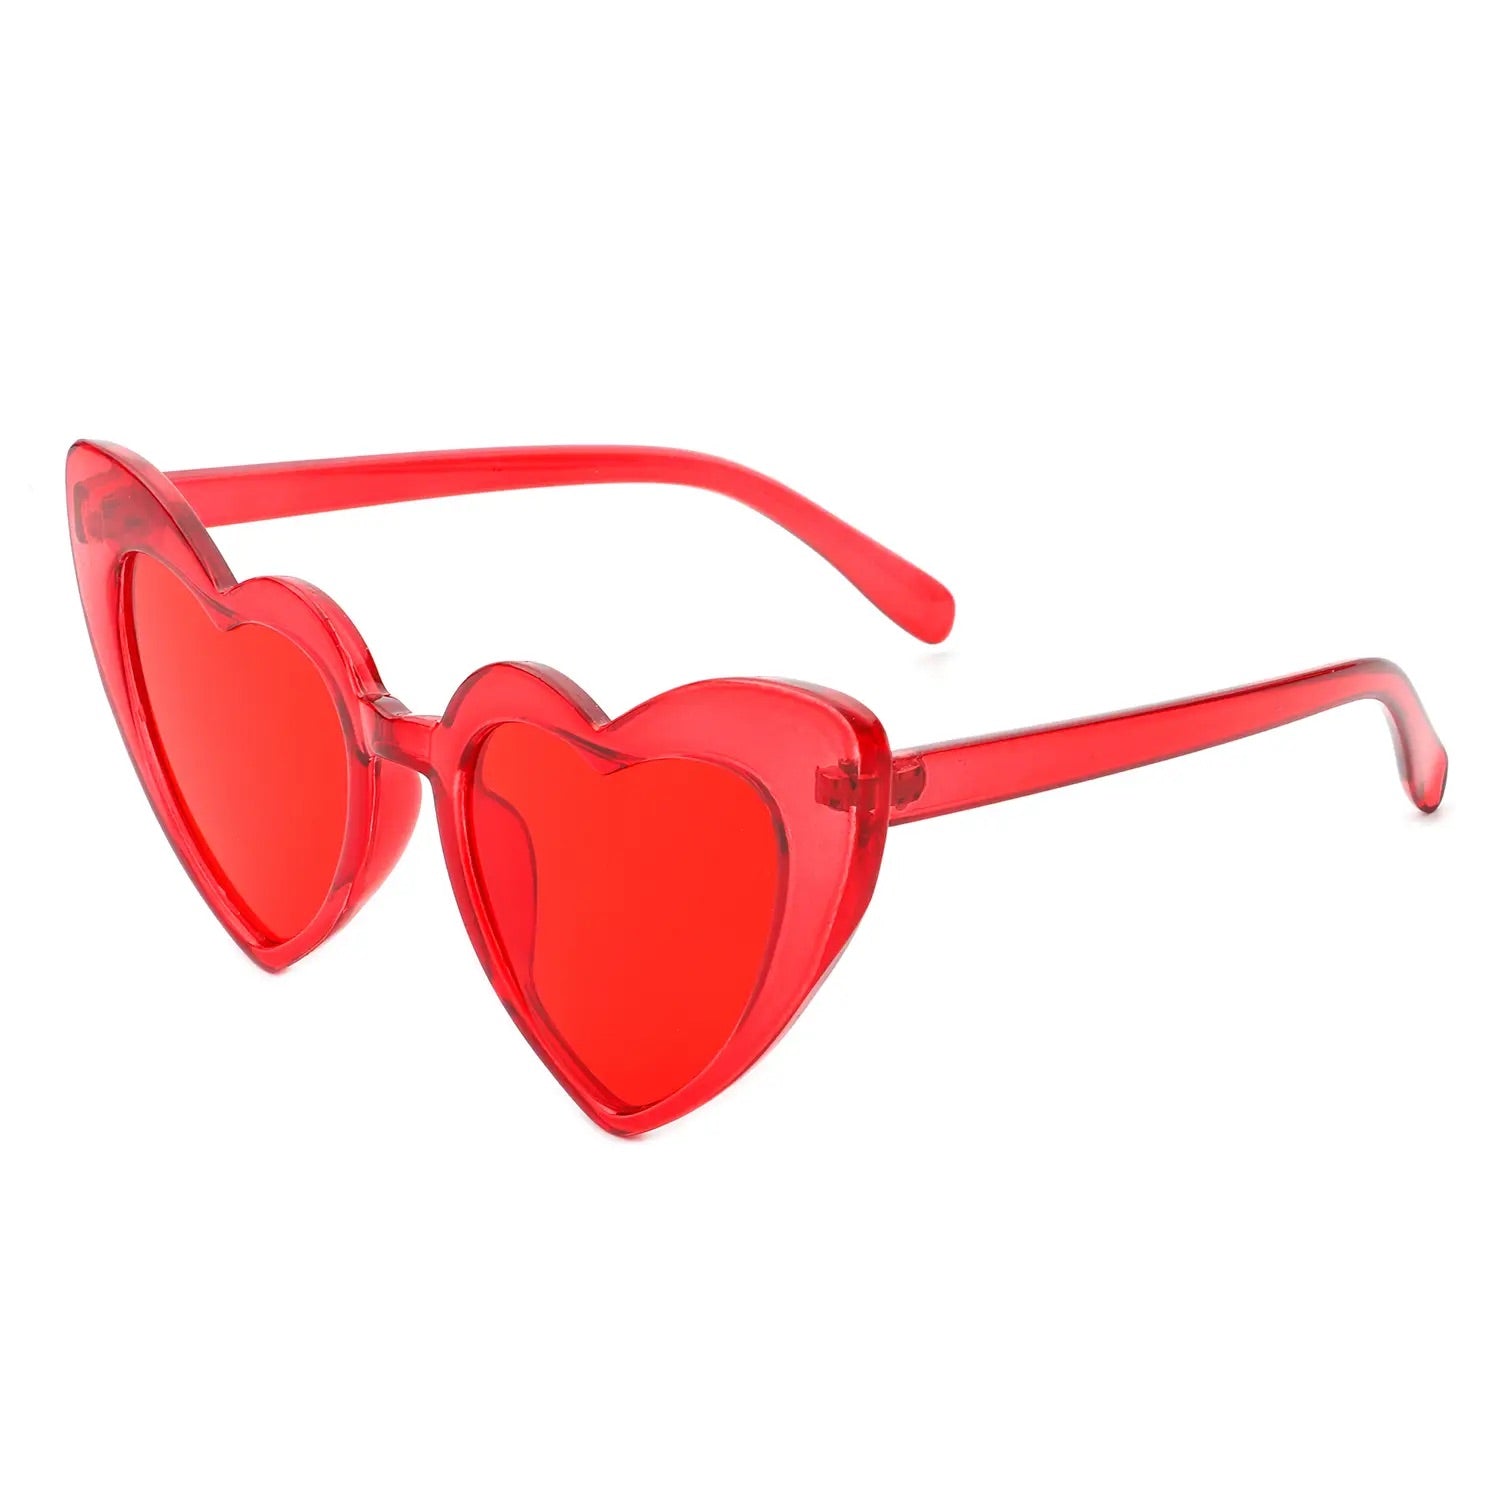 lover sunglasses